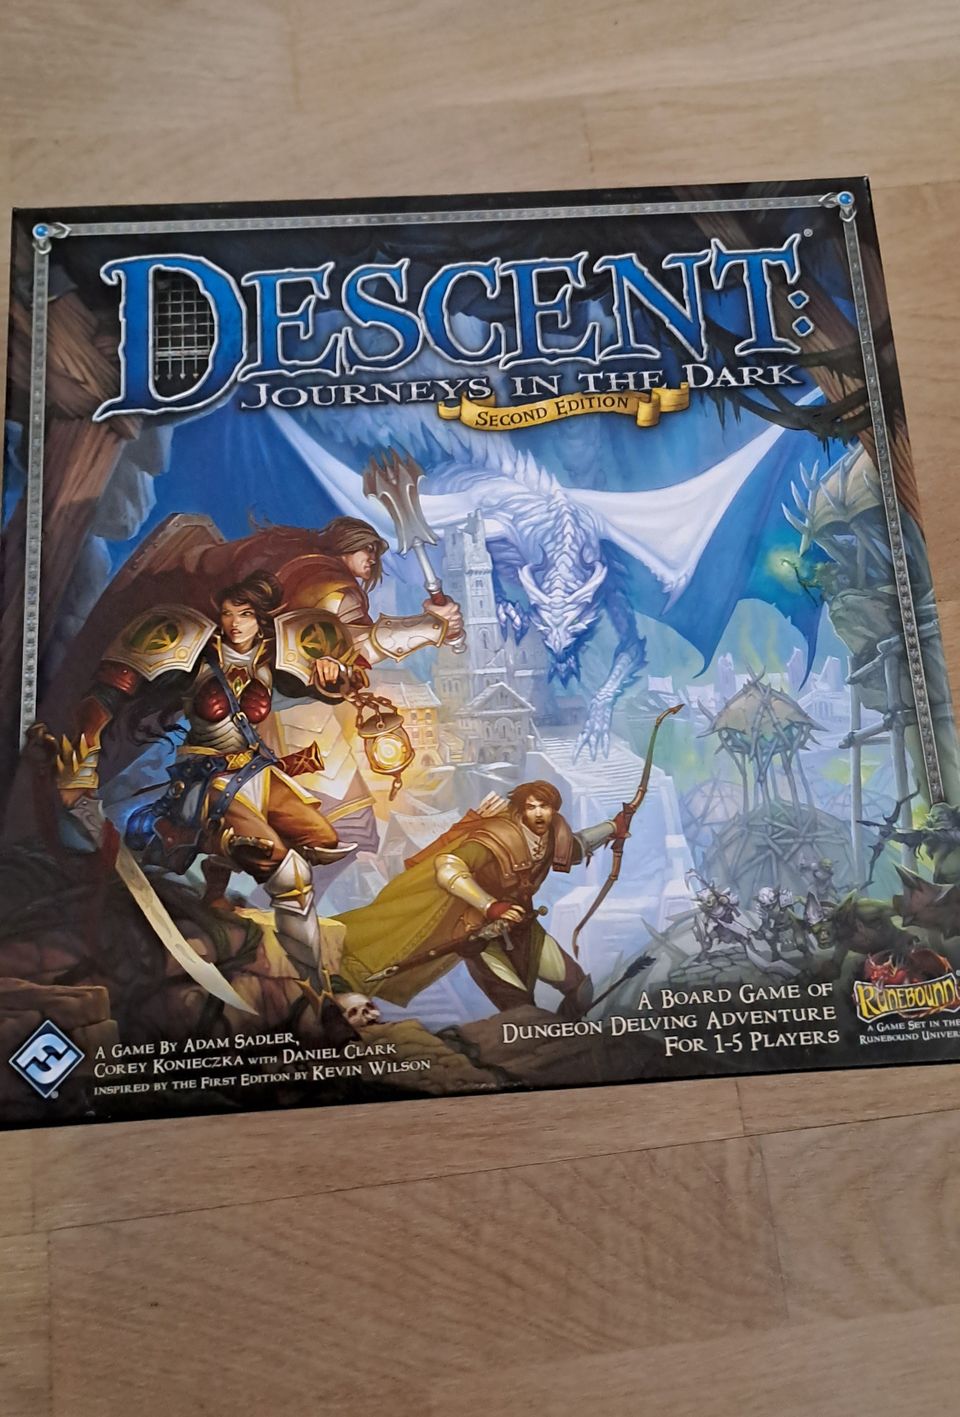 Descent: Journeys in the dark second edition